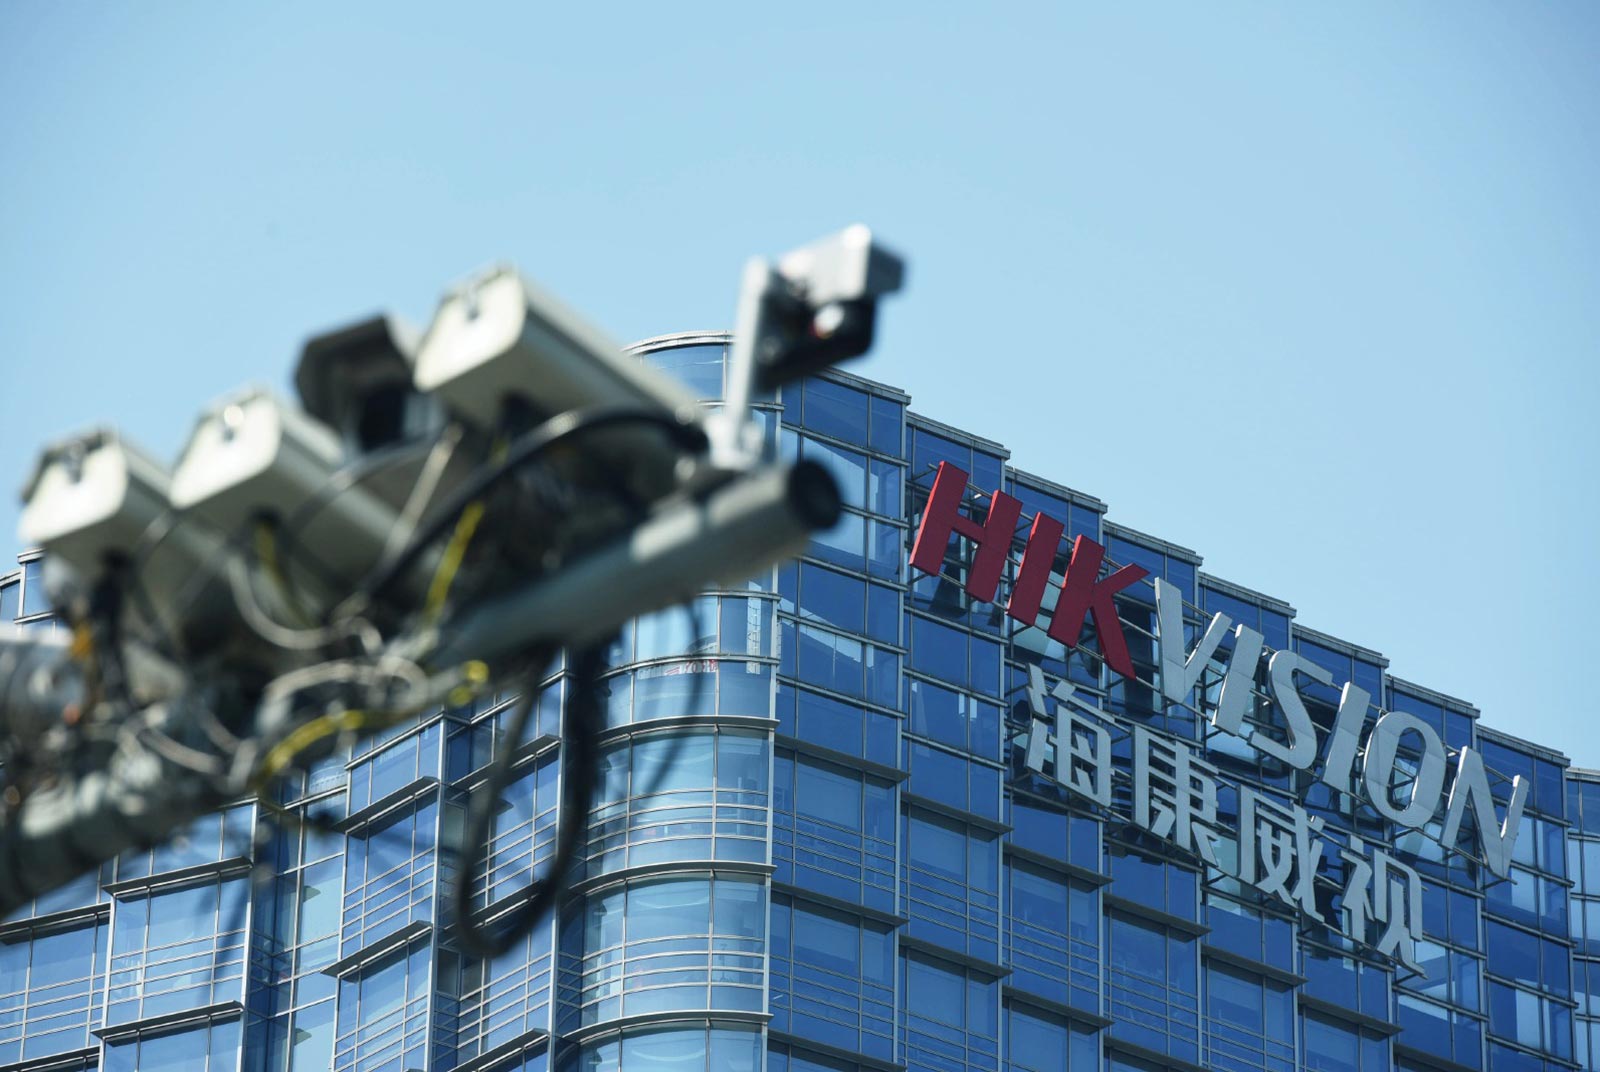 Despite ban, Chinese surveillance equipment infiltrating Taiwan in plain sight